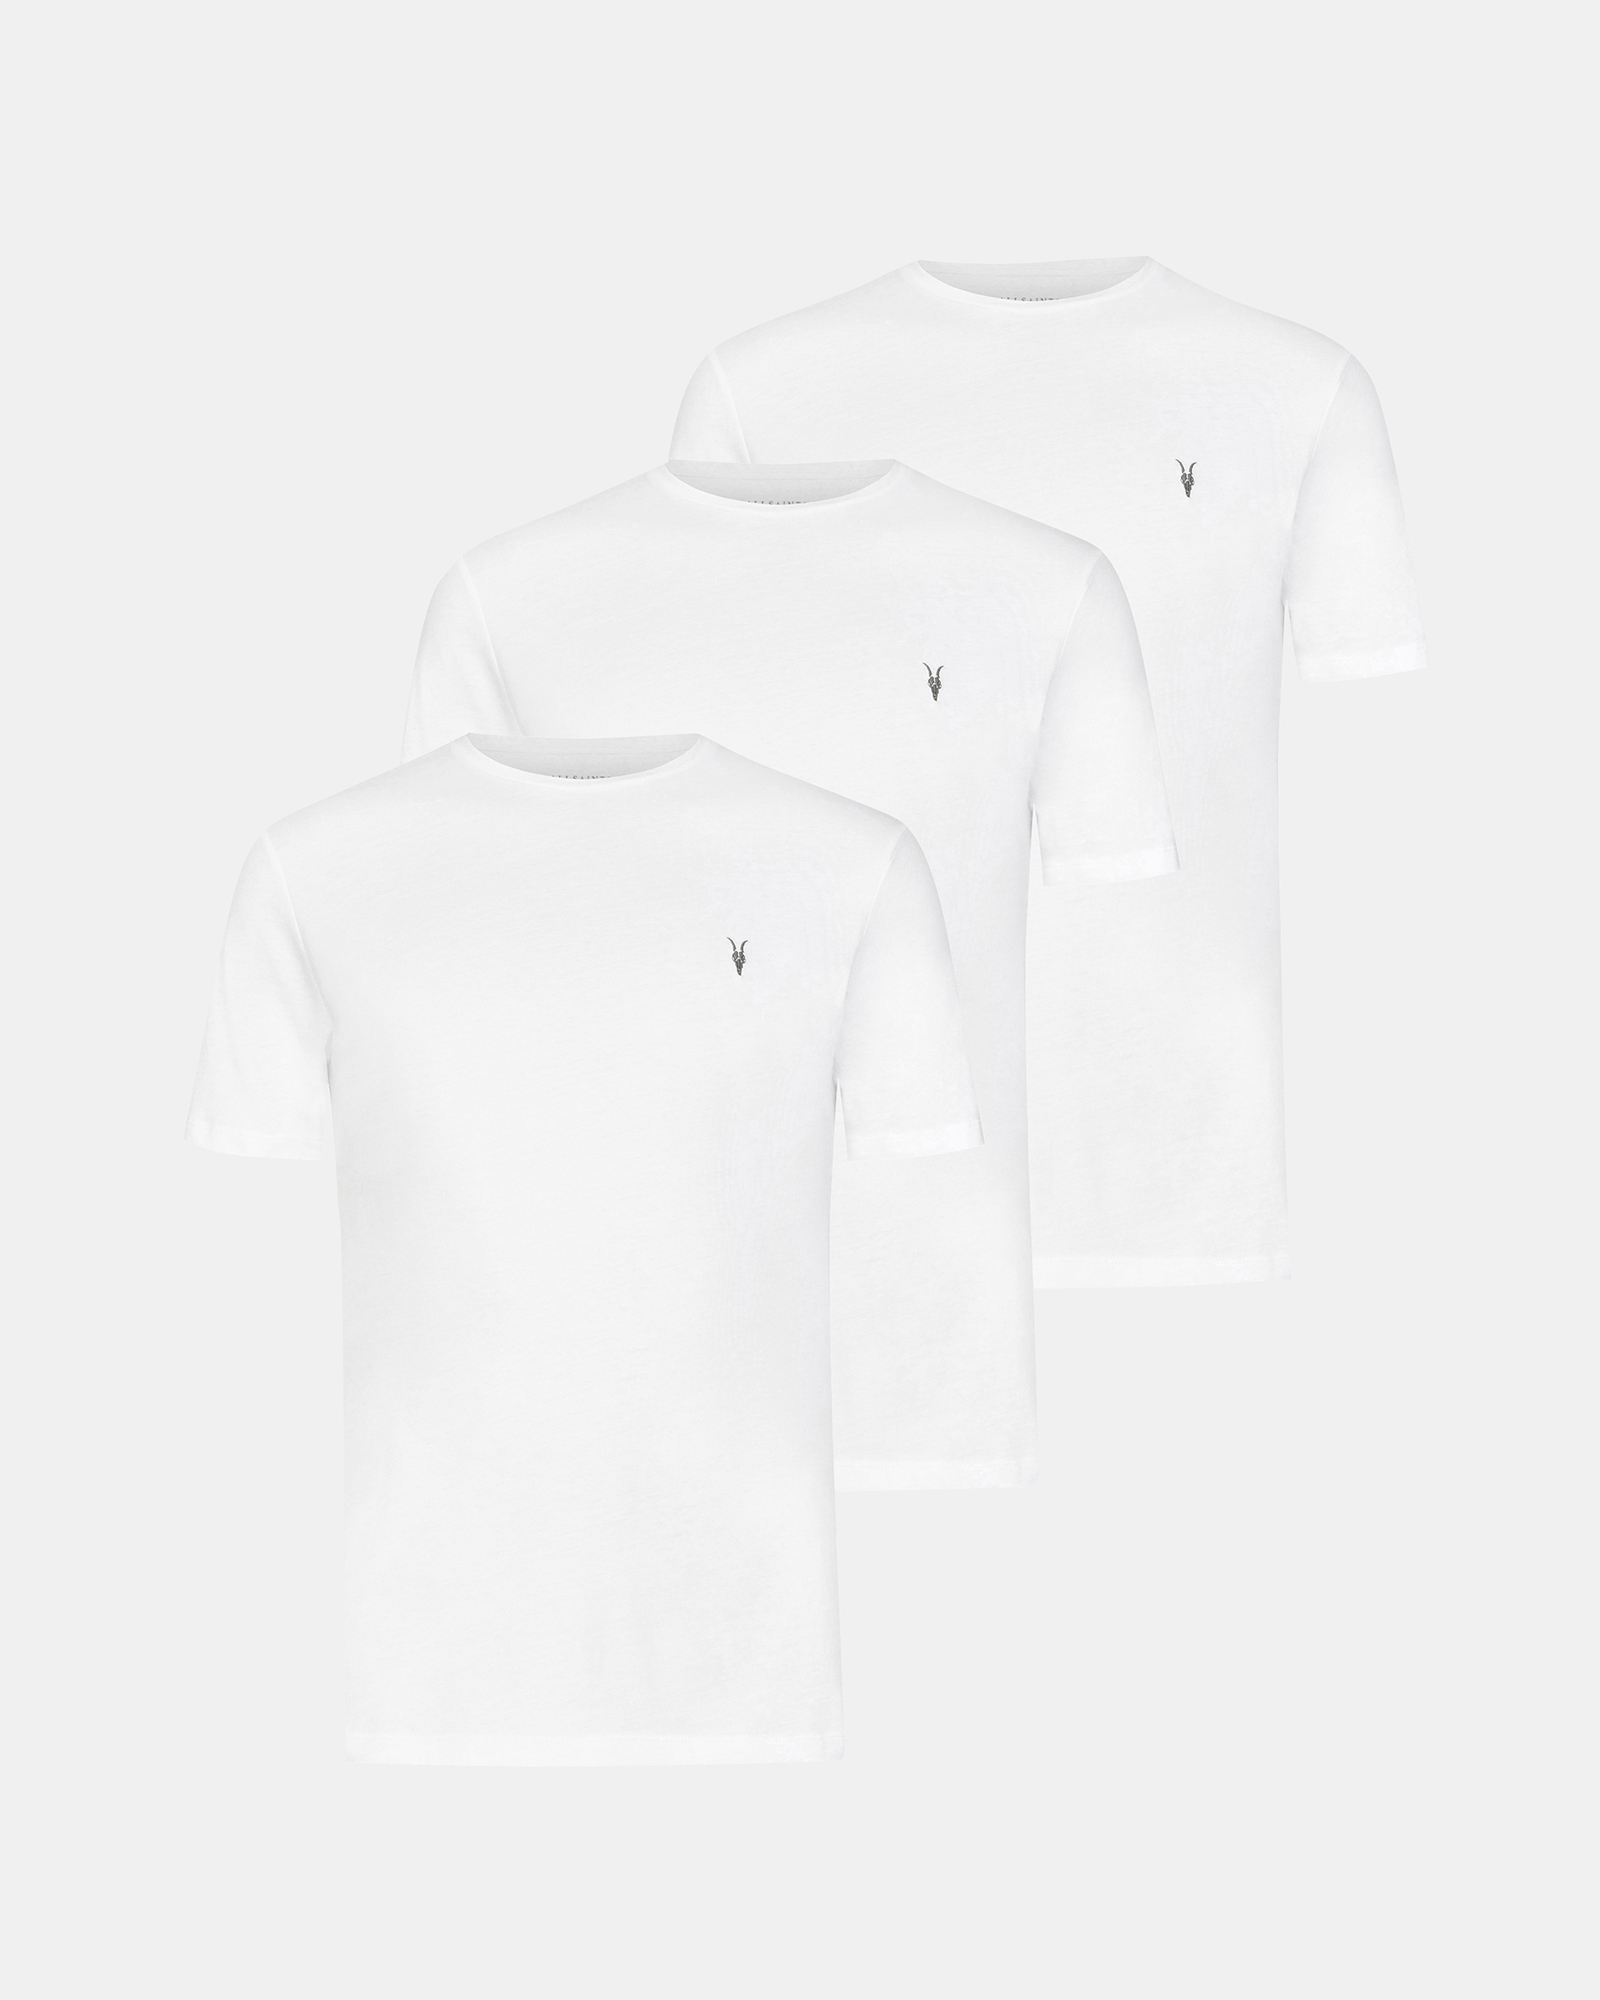 AllSaints Brace Brushed Cotton T-Shirts 3 Pack,, White